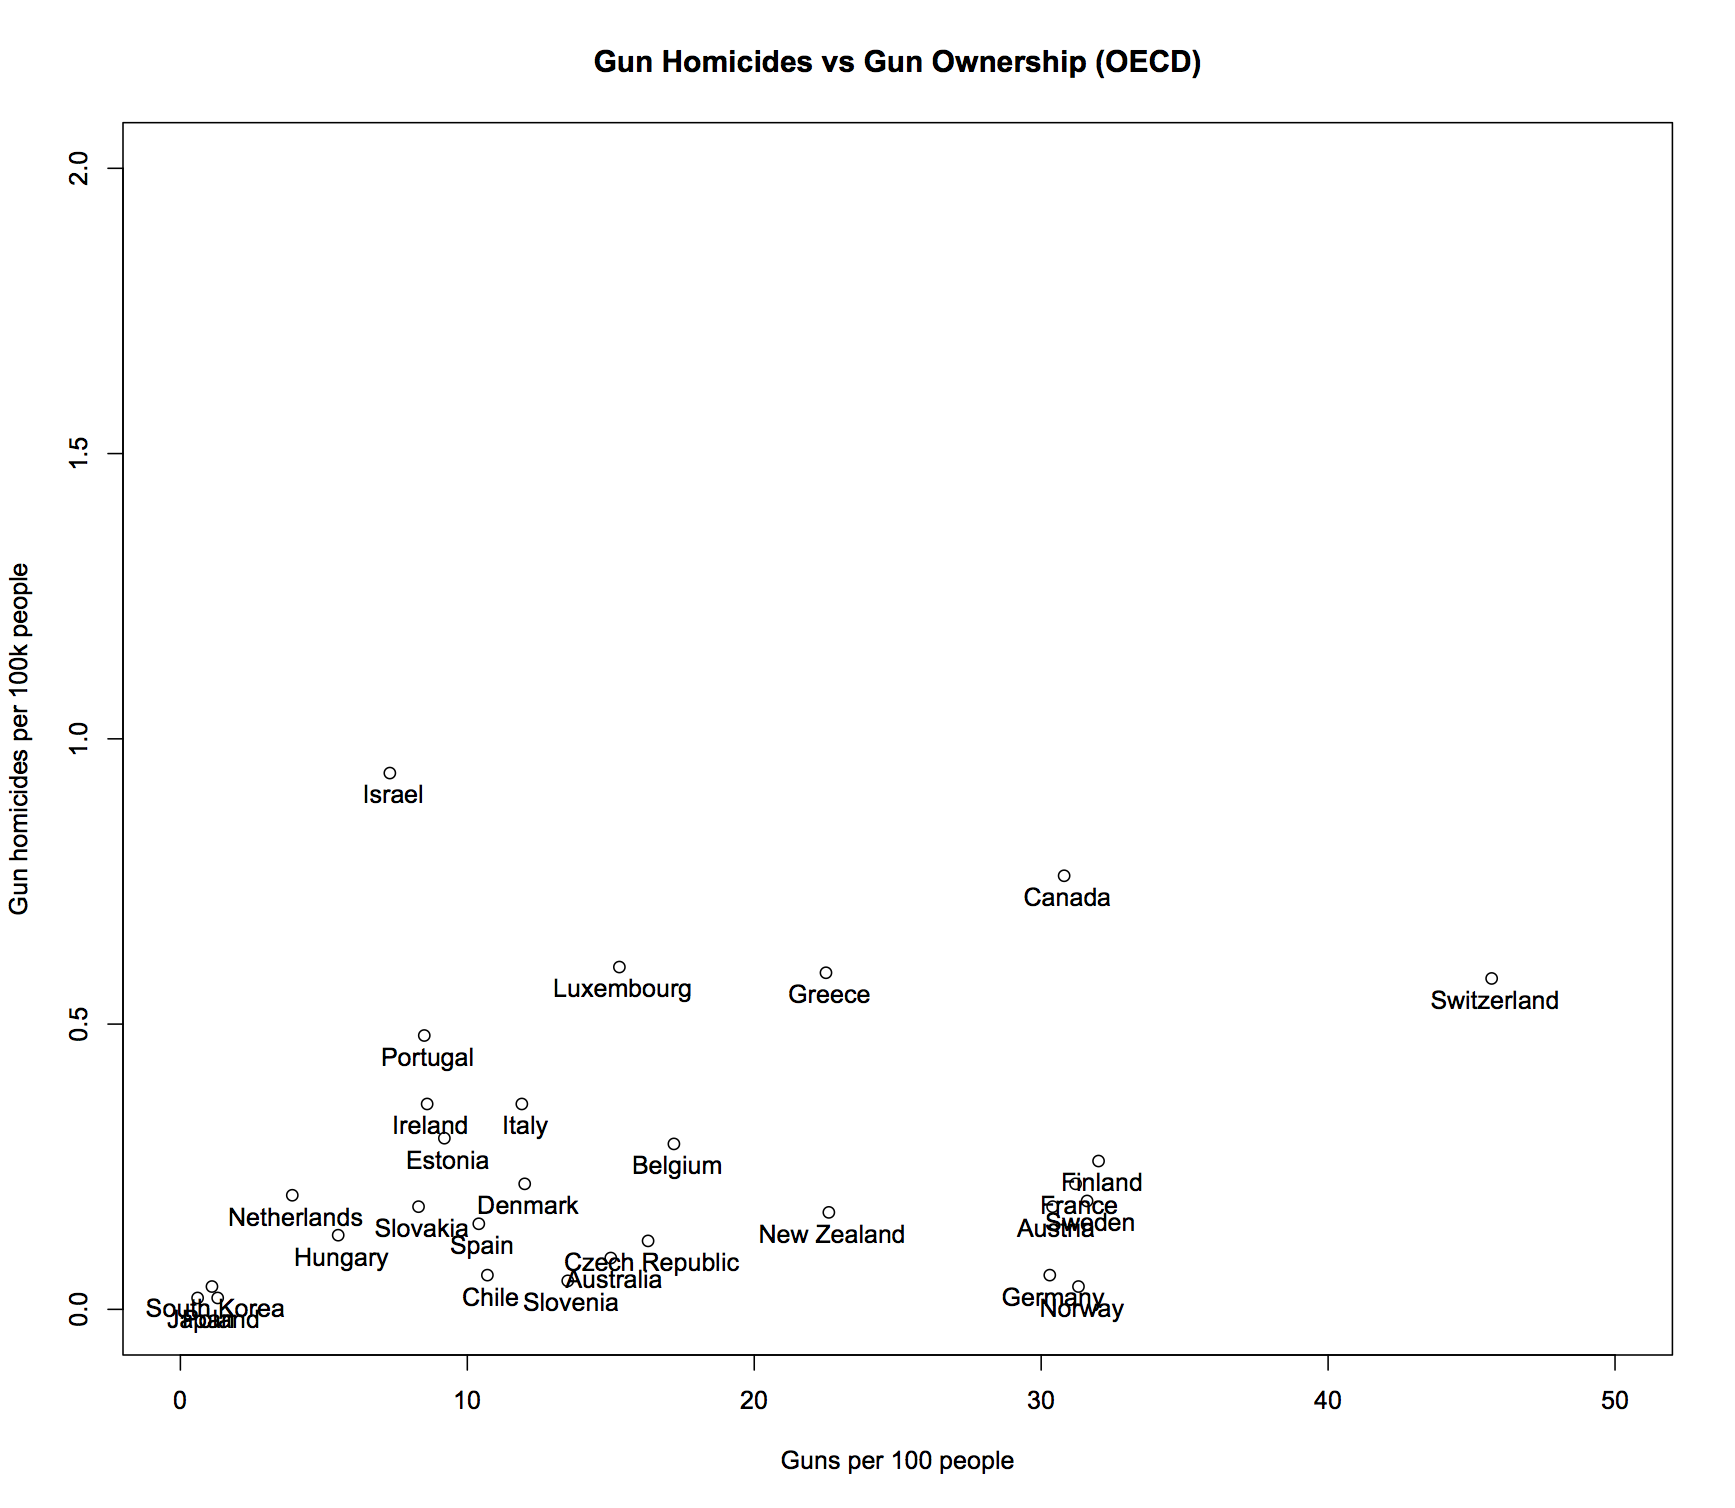 Figure 3: Detail of gun homicides per capita vs. gun ownership per capita in OECD countries.